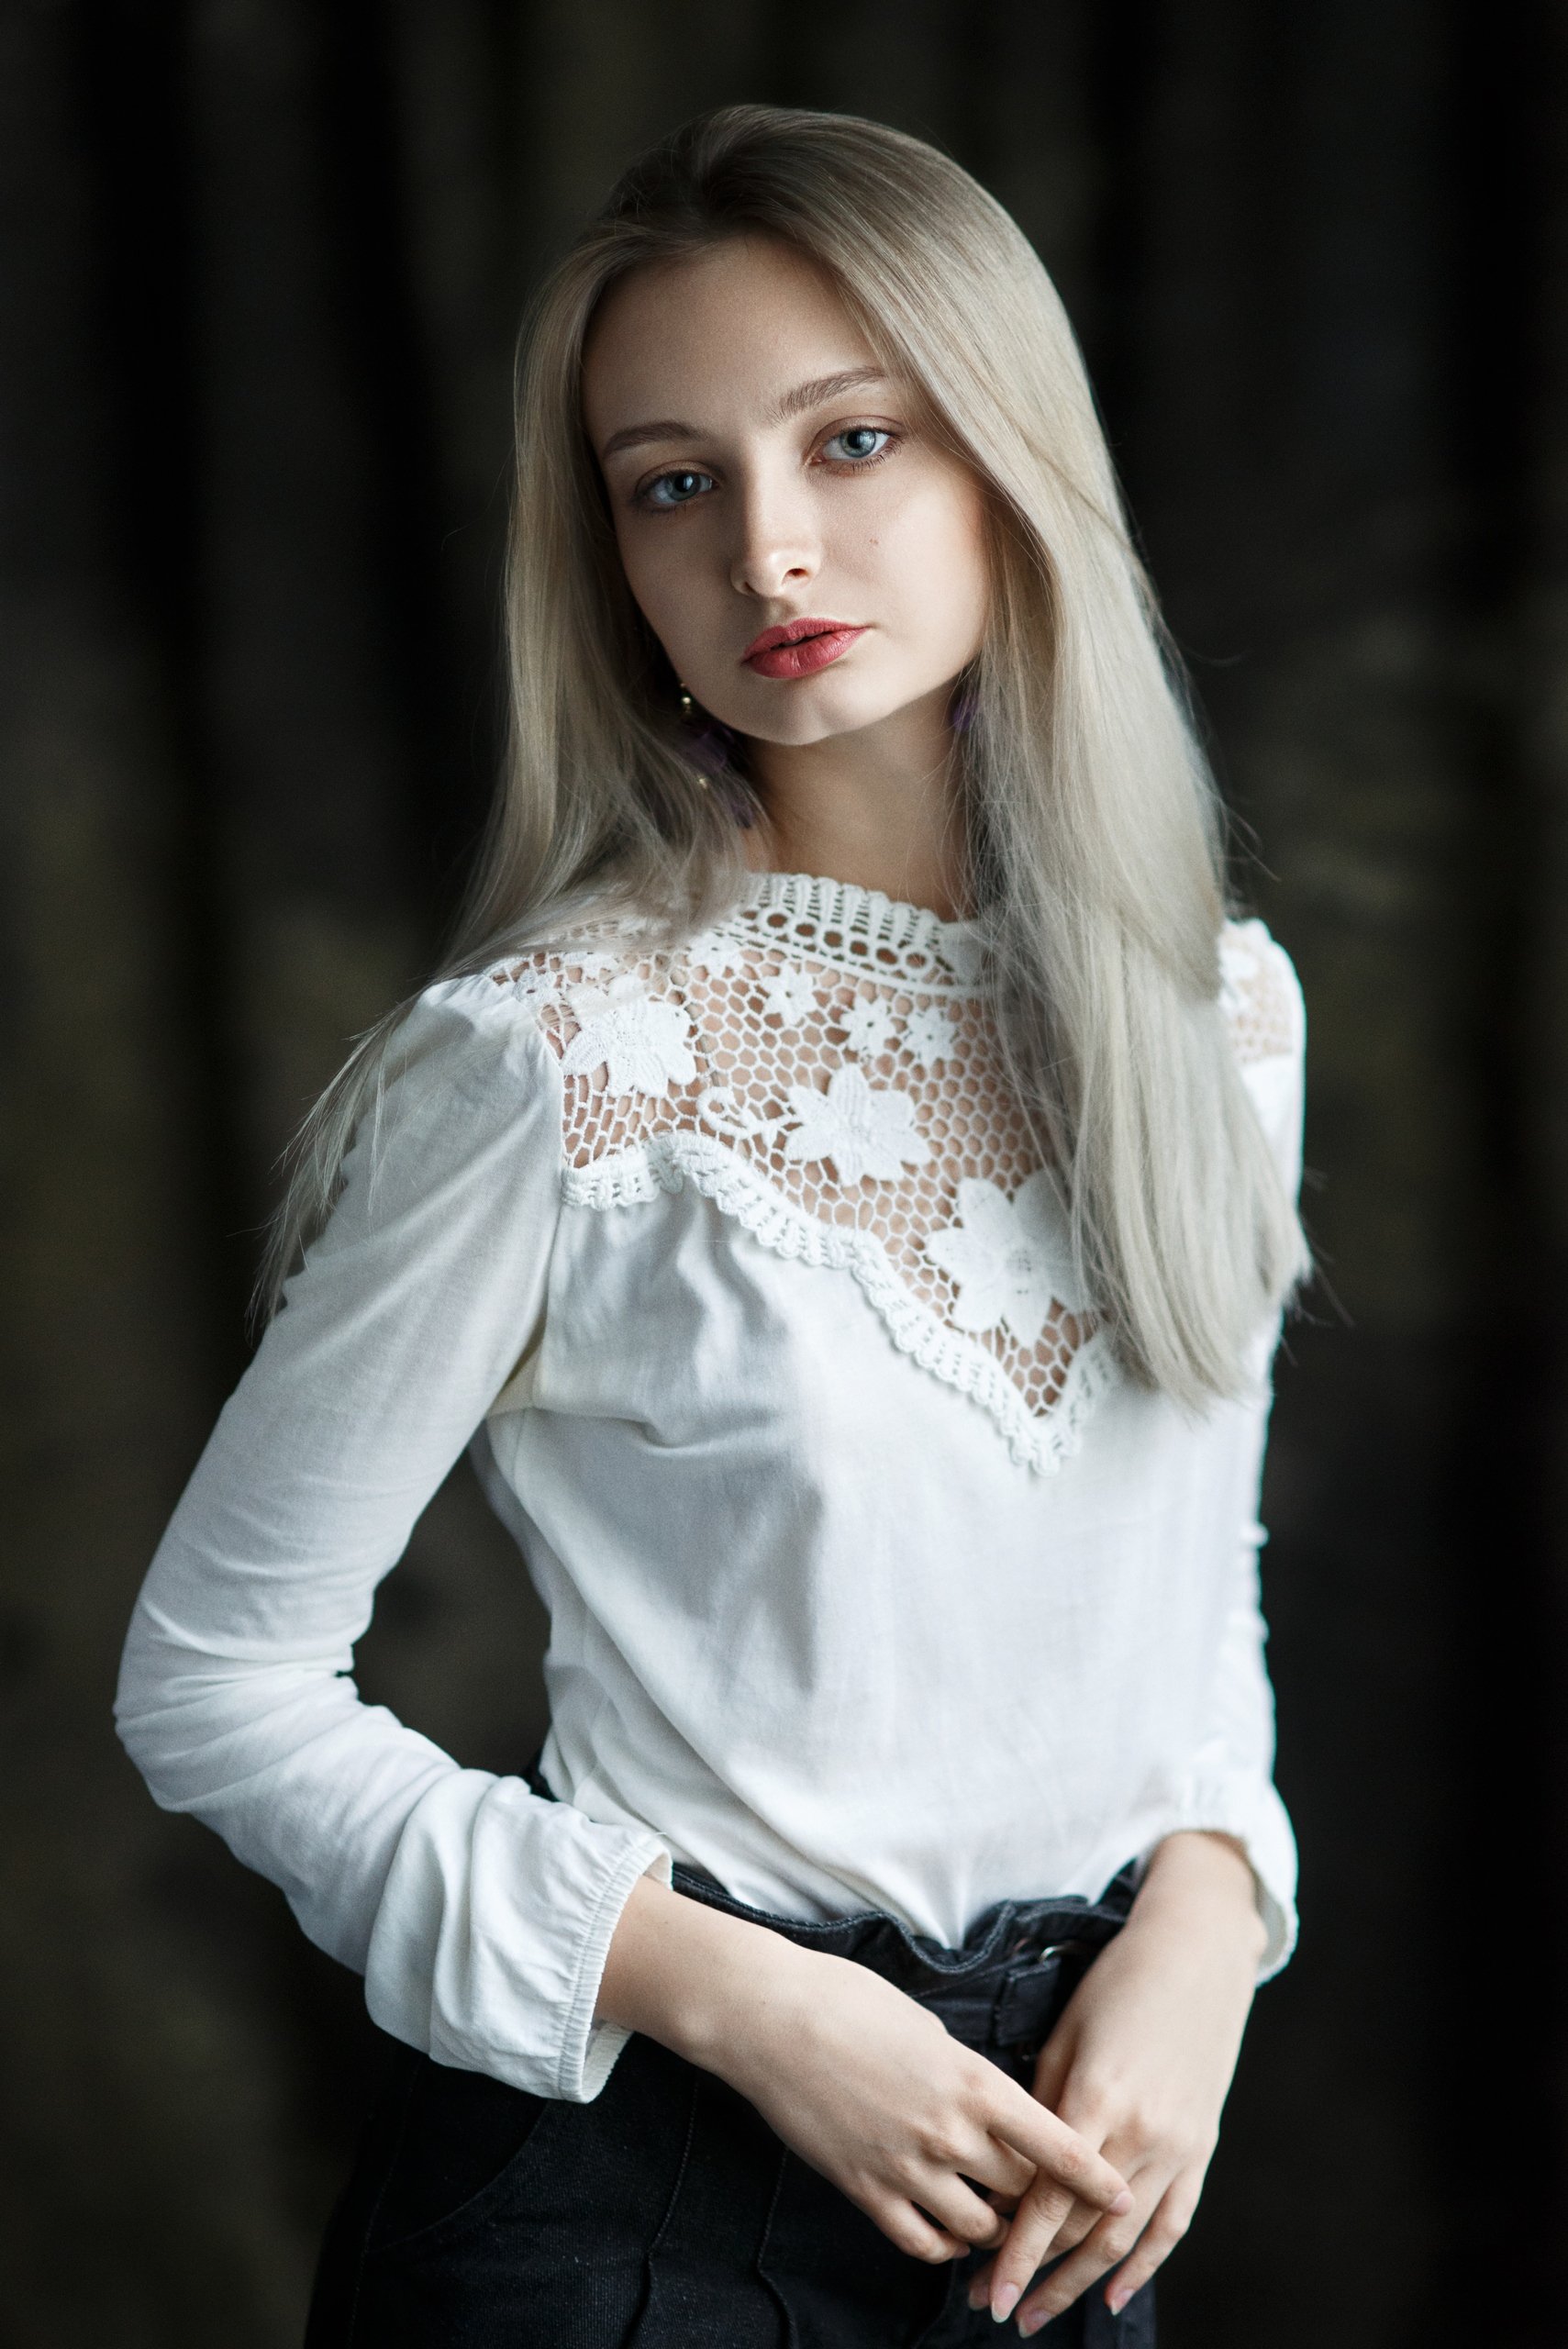 Ksenia,portrait, girl,, Черепко Павел